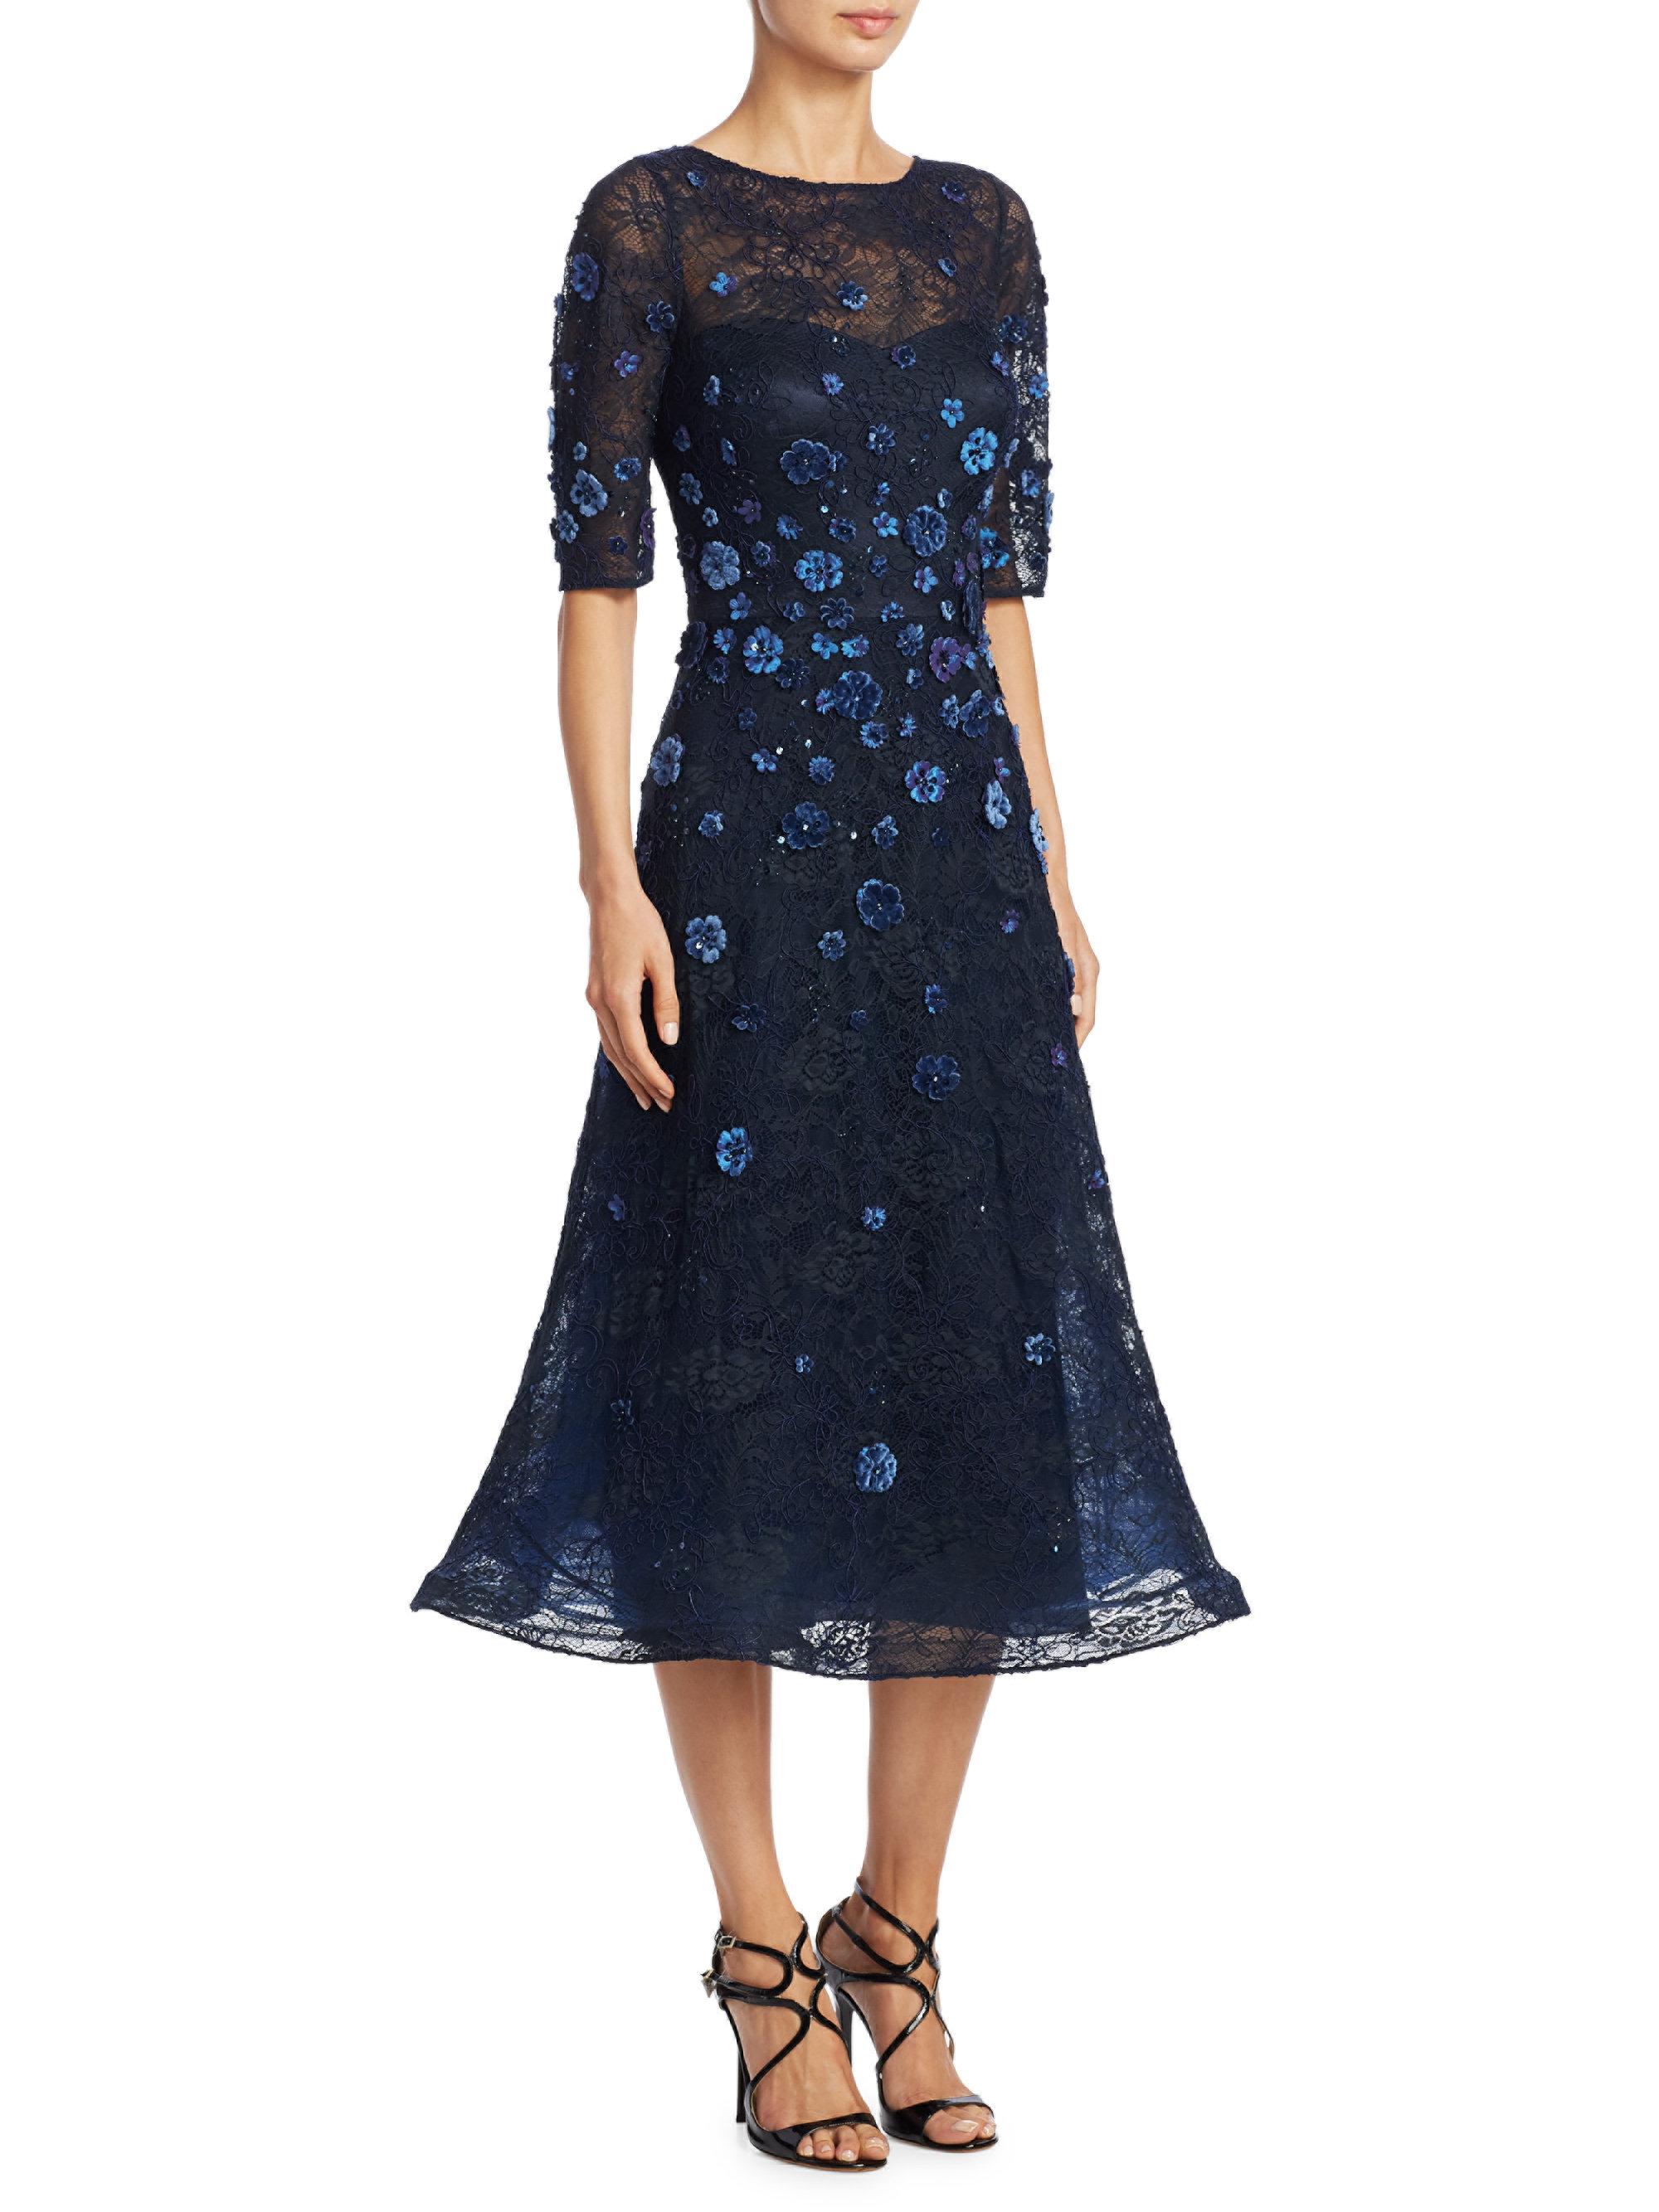 Lyst - Teri Jon 3-d Floral Applique Dress in Blue